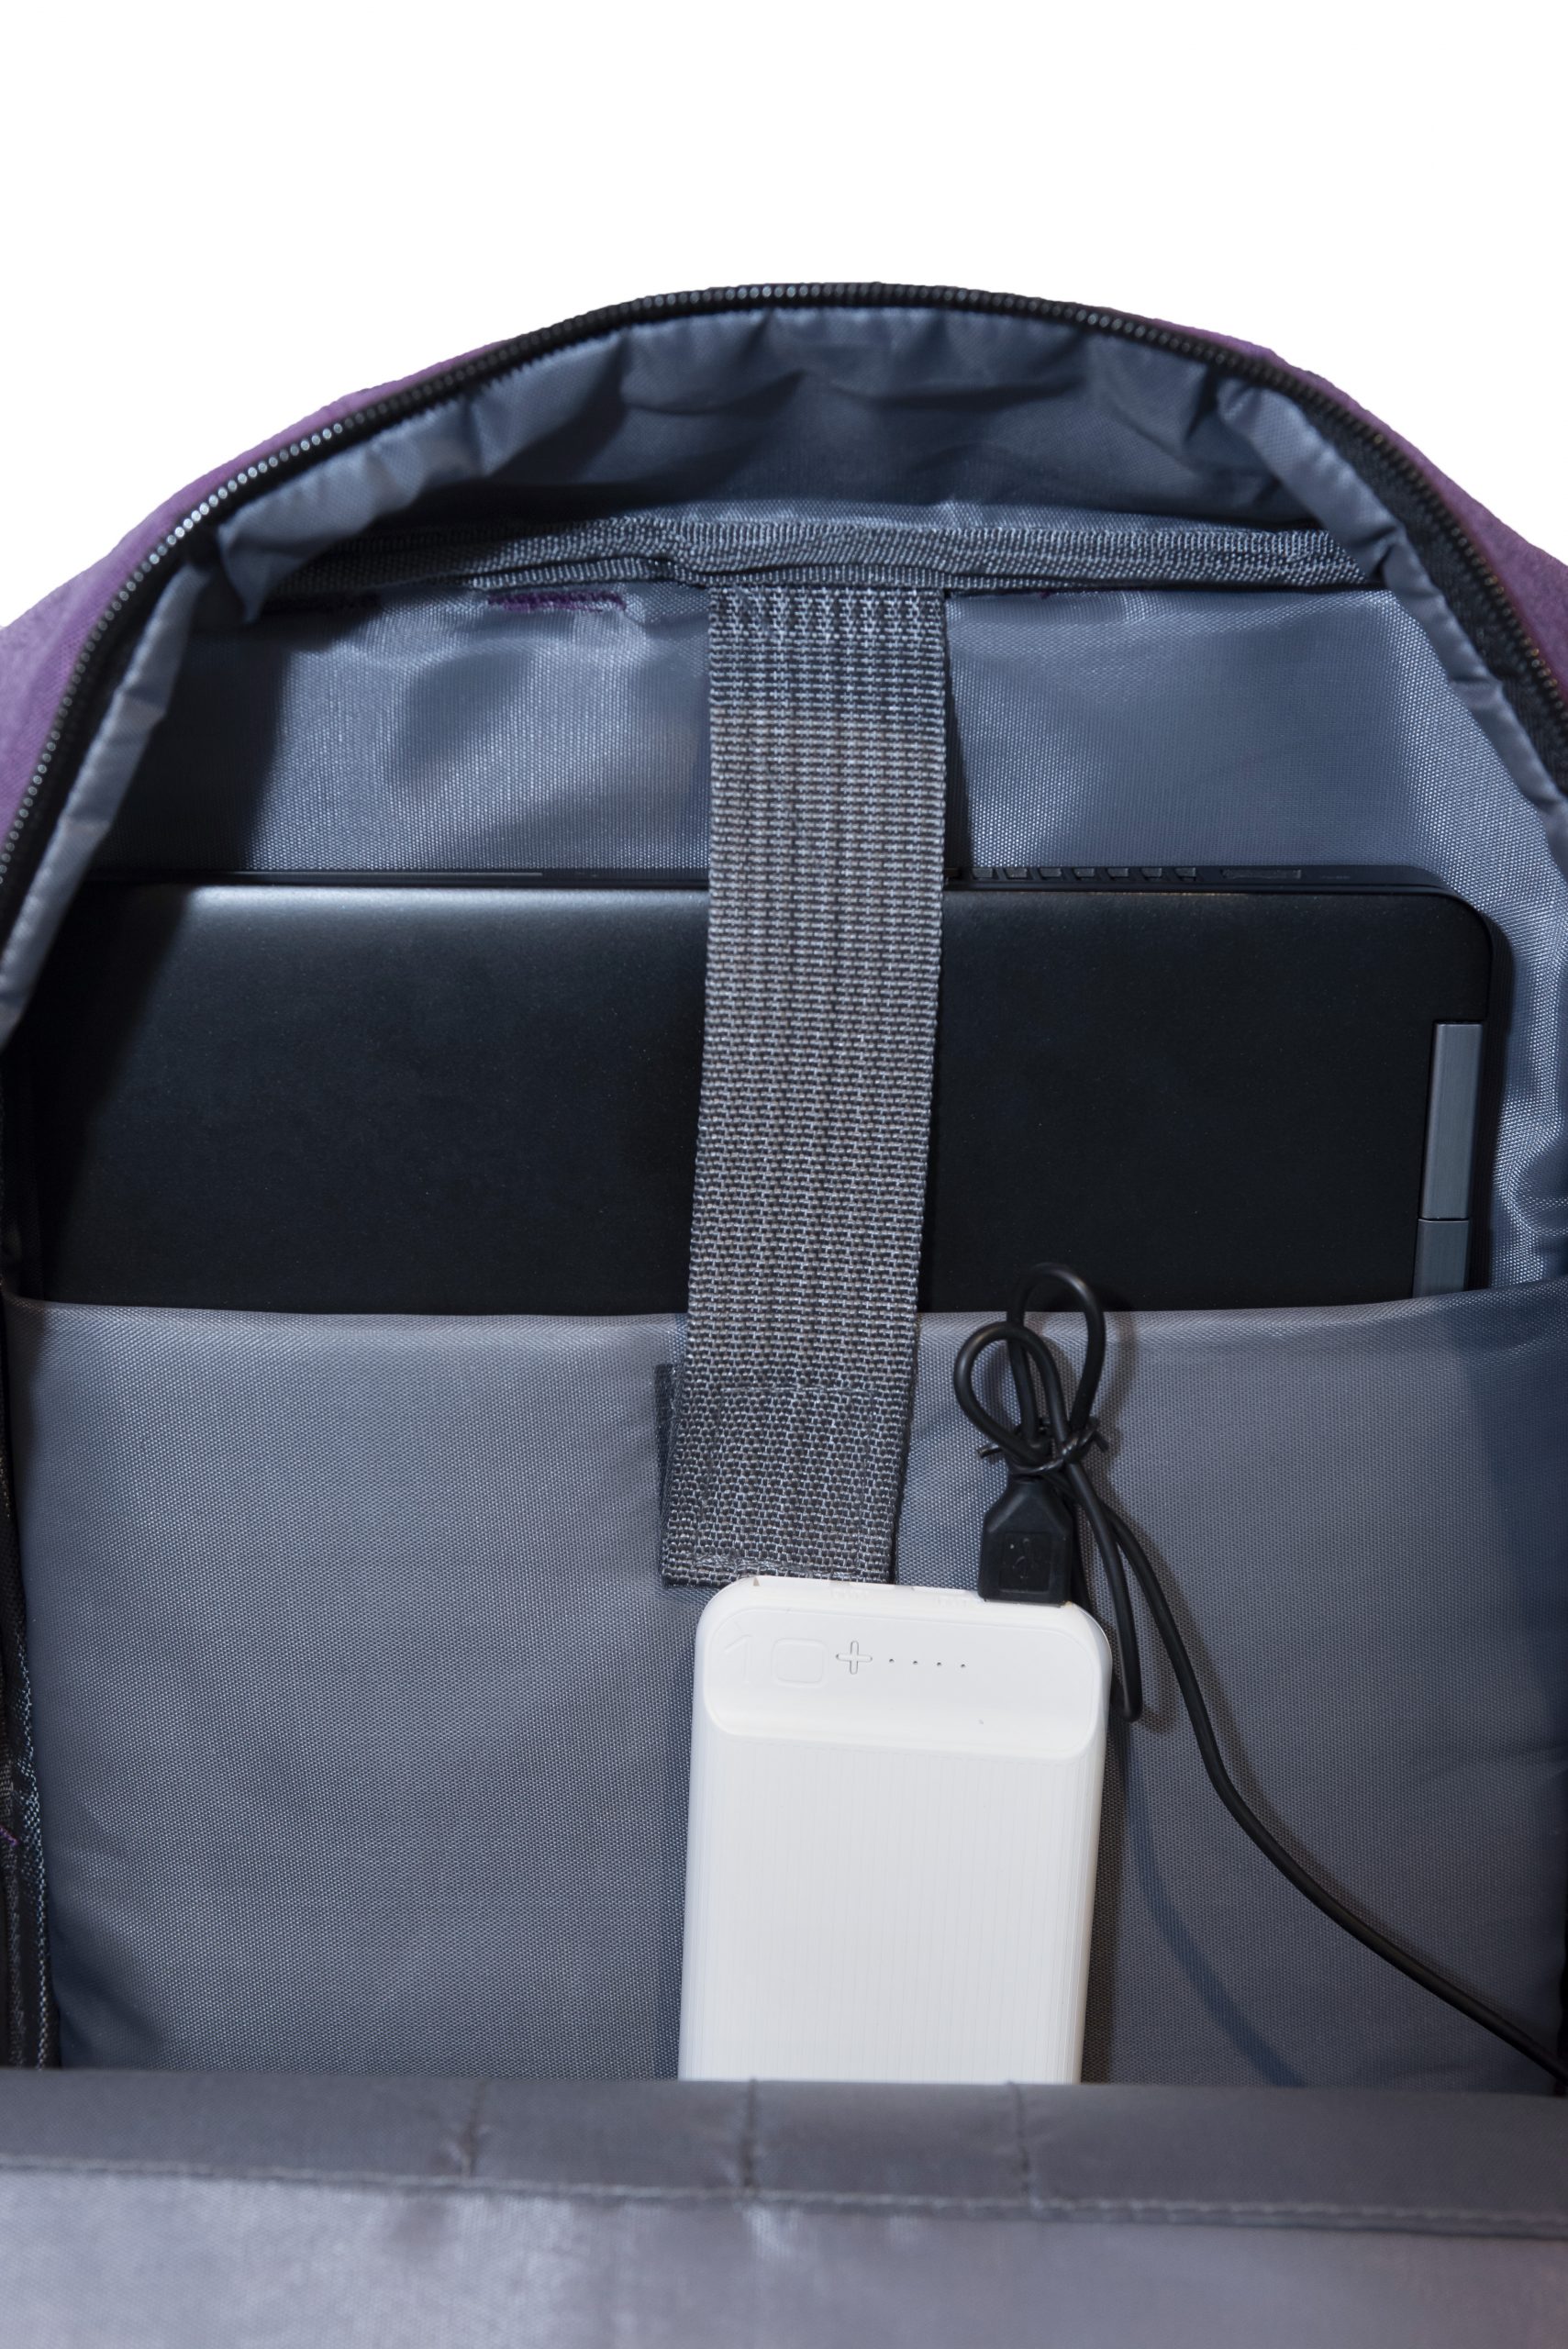 Custom Laptop Backpack Printing_LT19_INNER VIEW 1